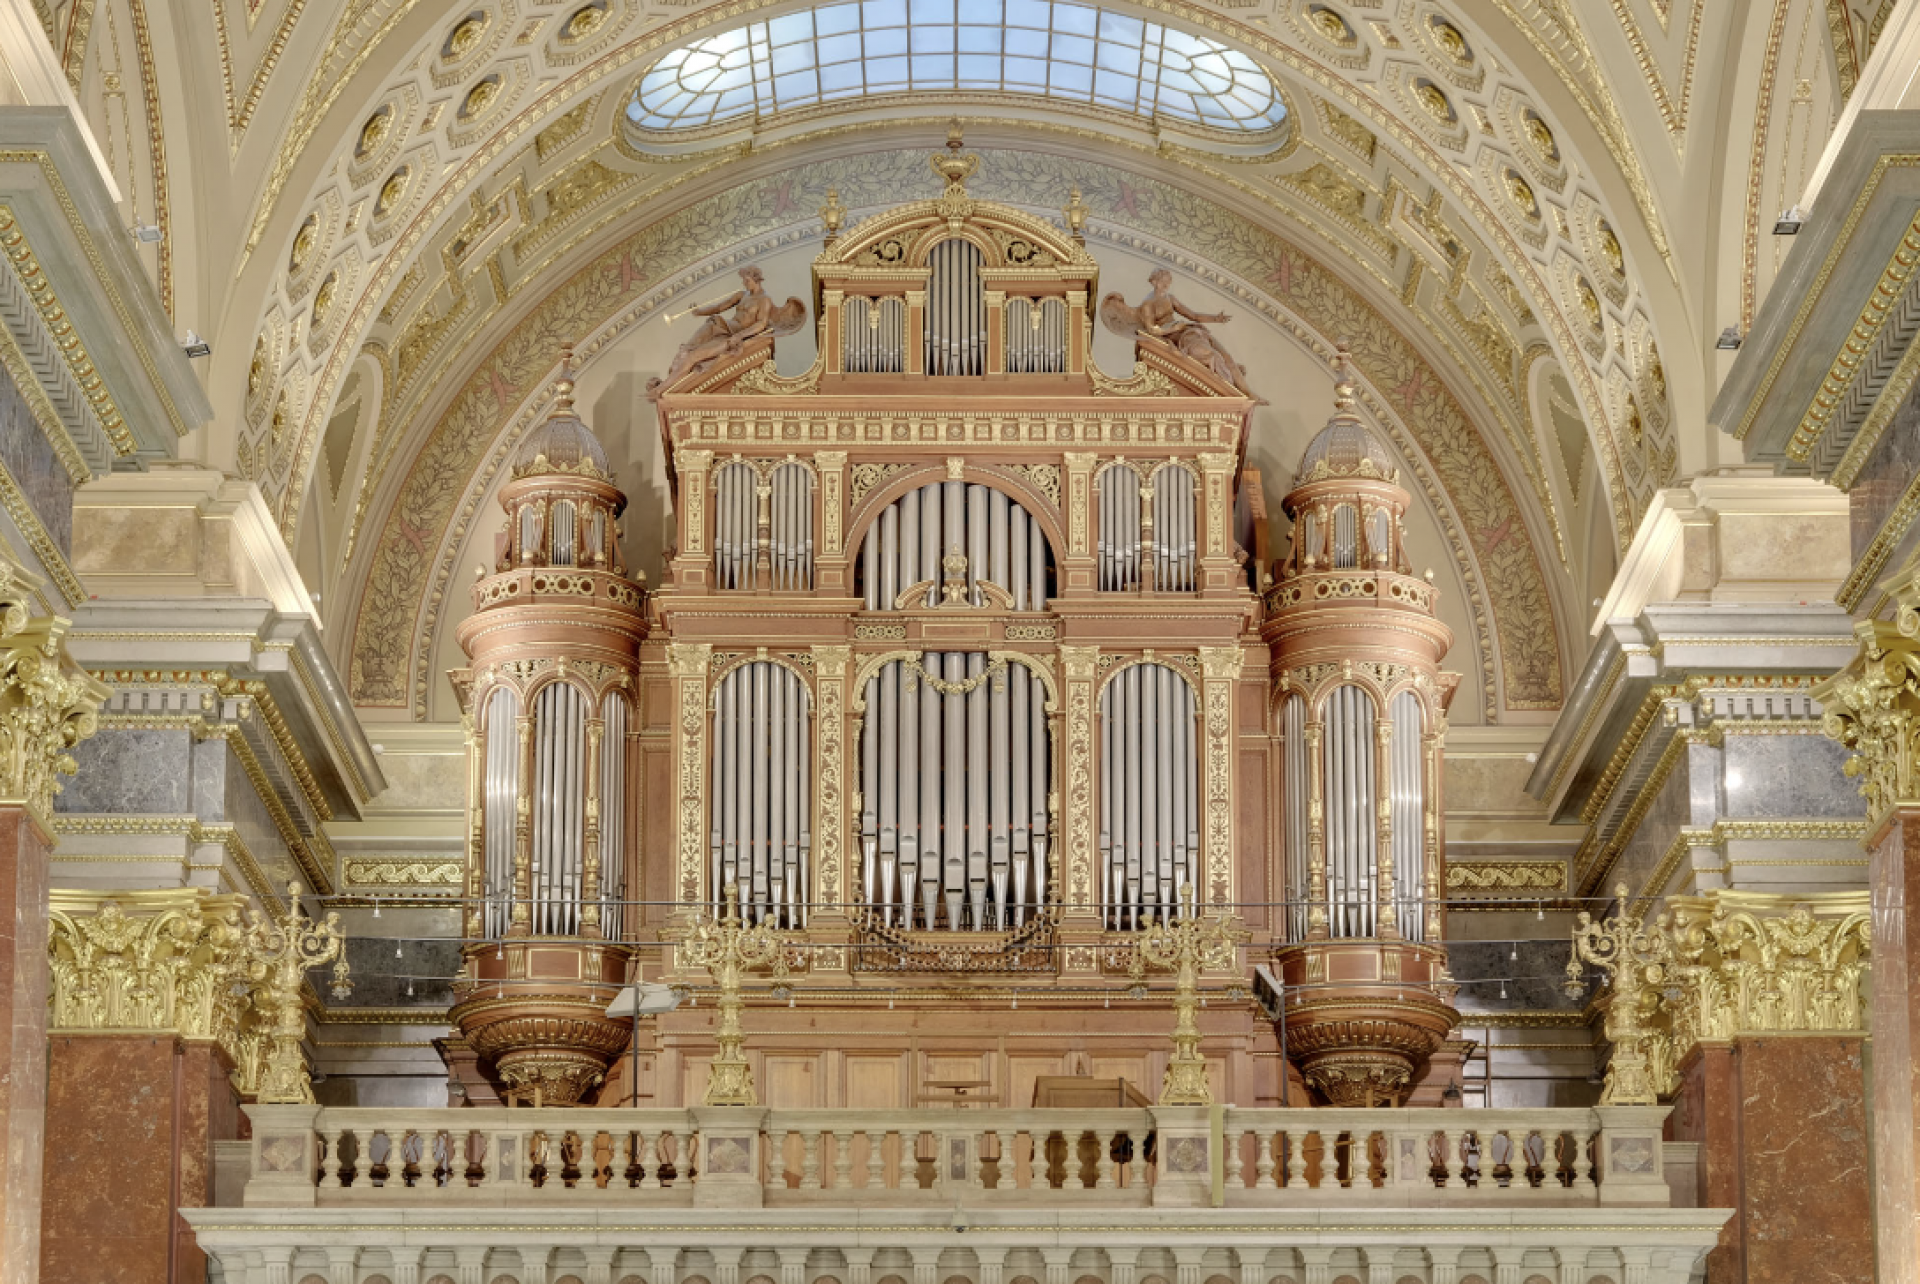 Organ Concert in the Basilica